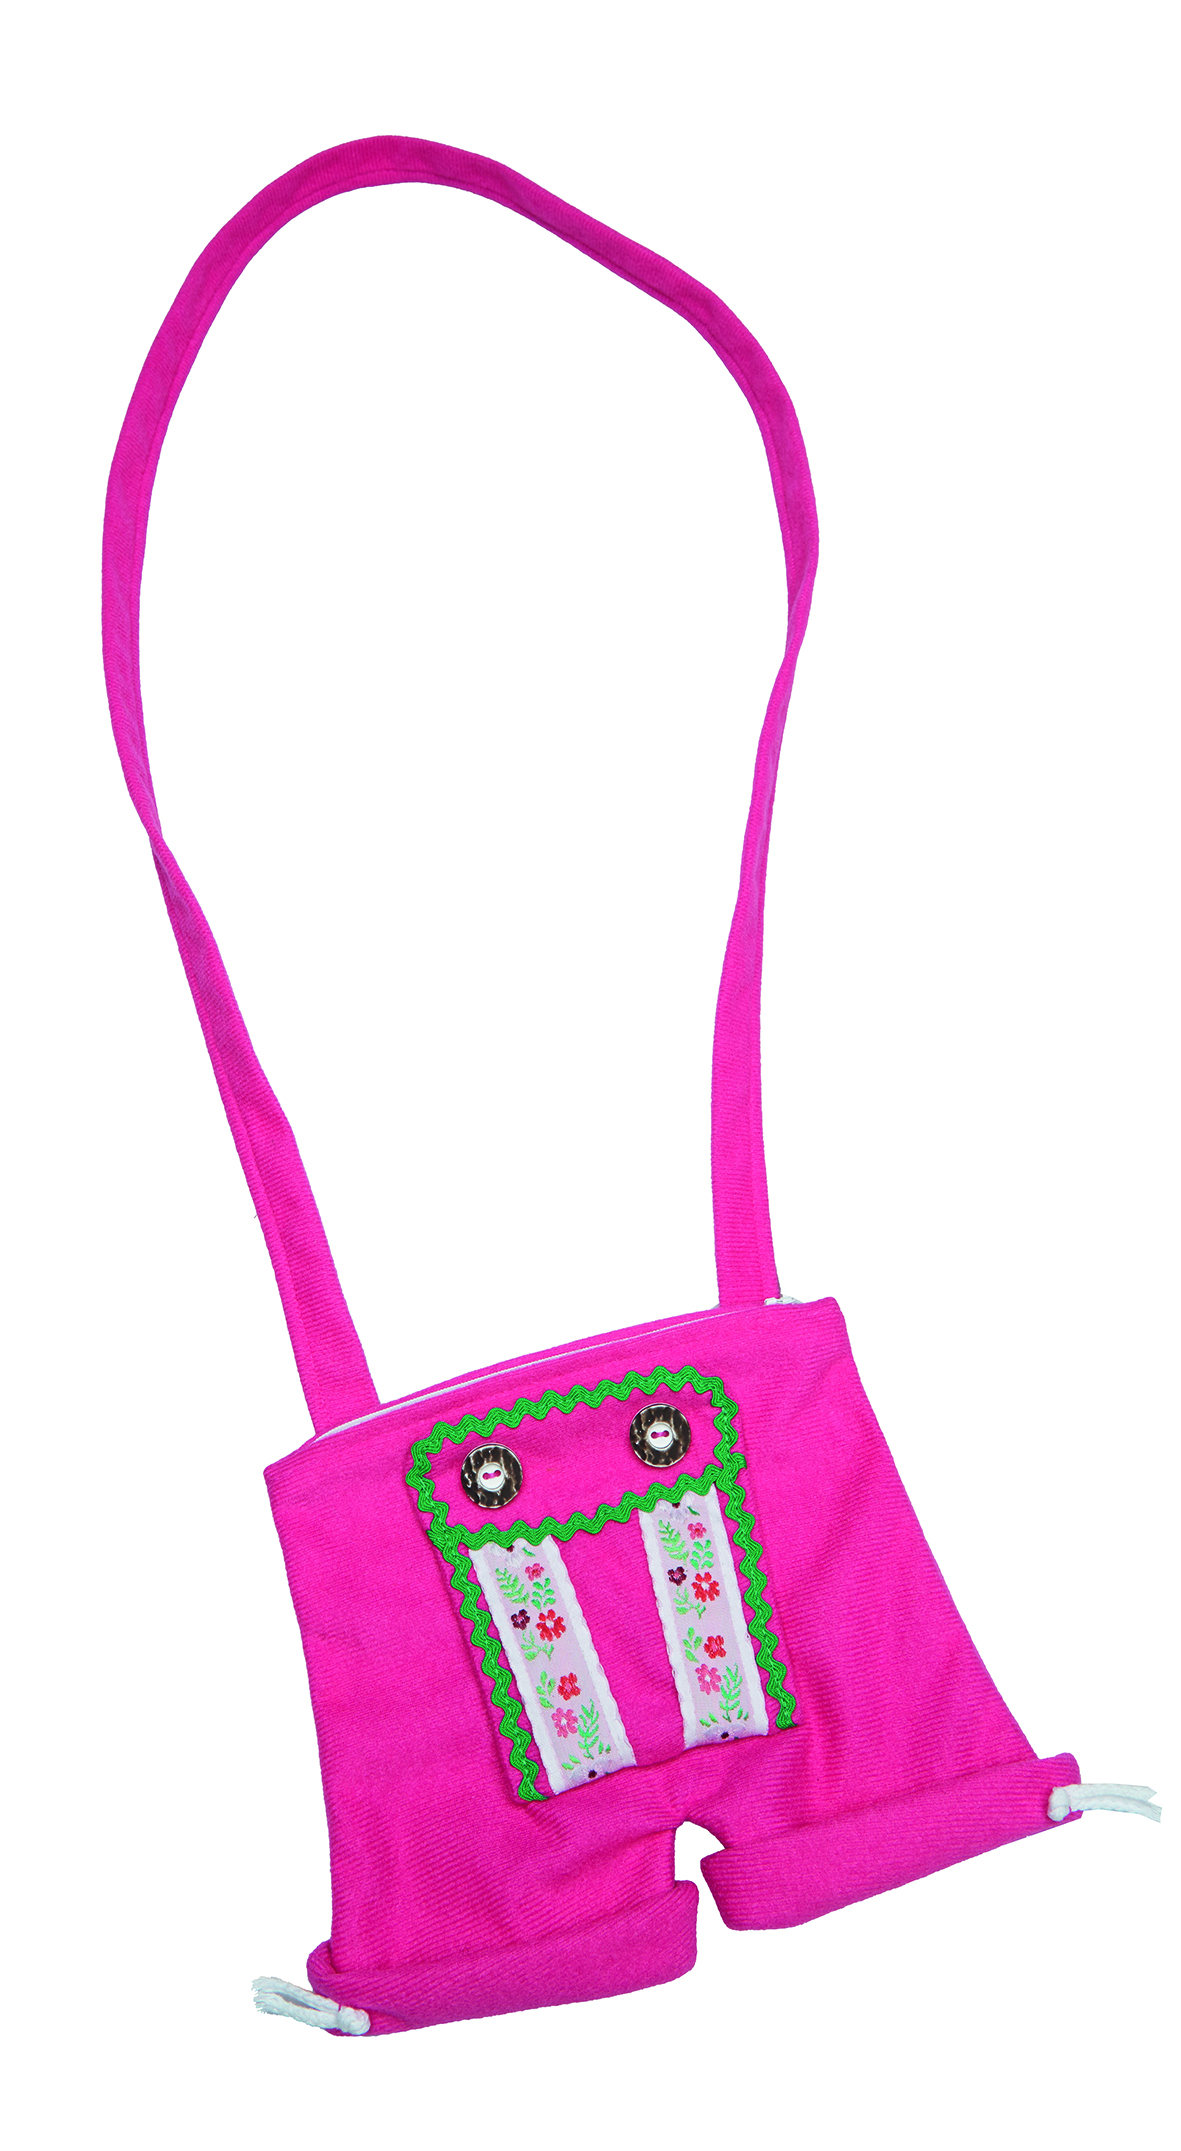 PxP 6190615 - Tasche Seppelhose pink, Trachtentasche, Handtasche, Kostümzubehör Umhängetasche Lederhosen